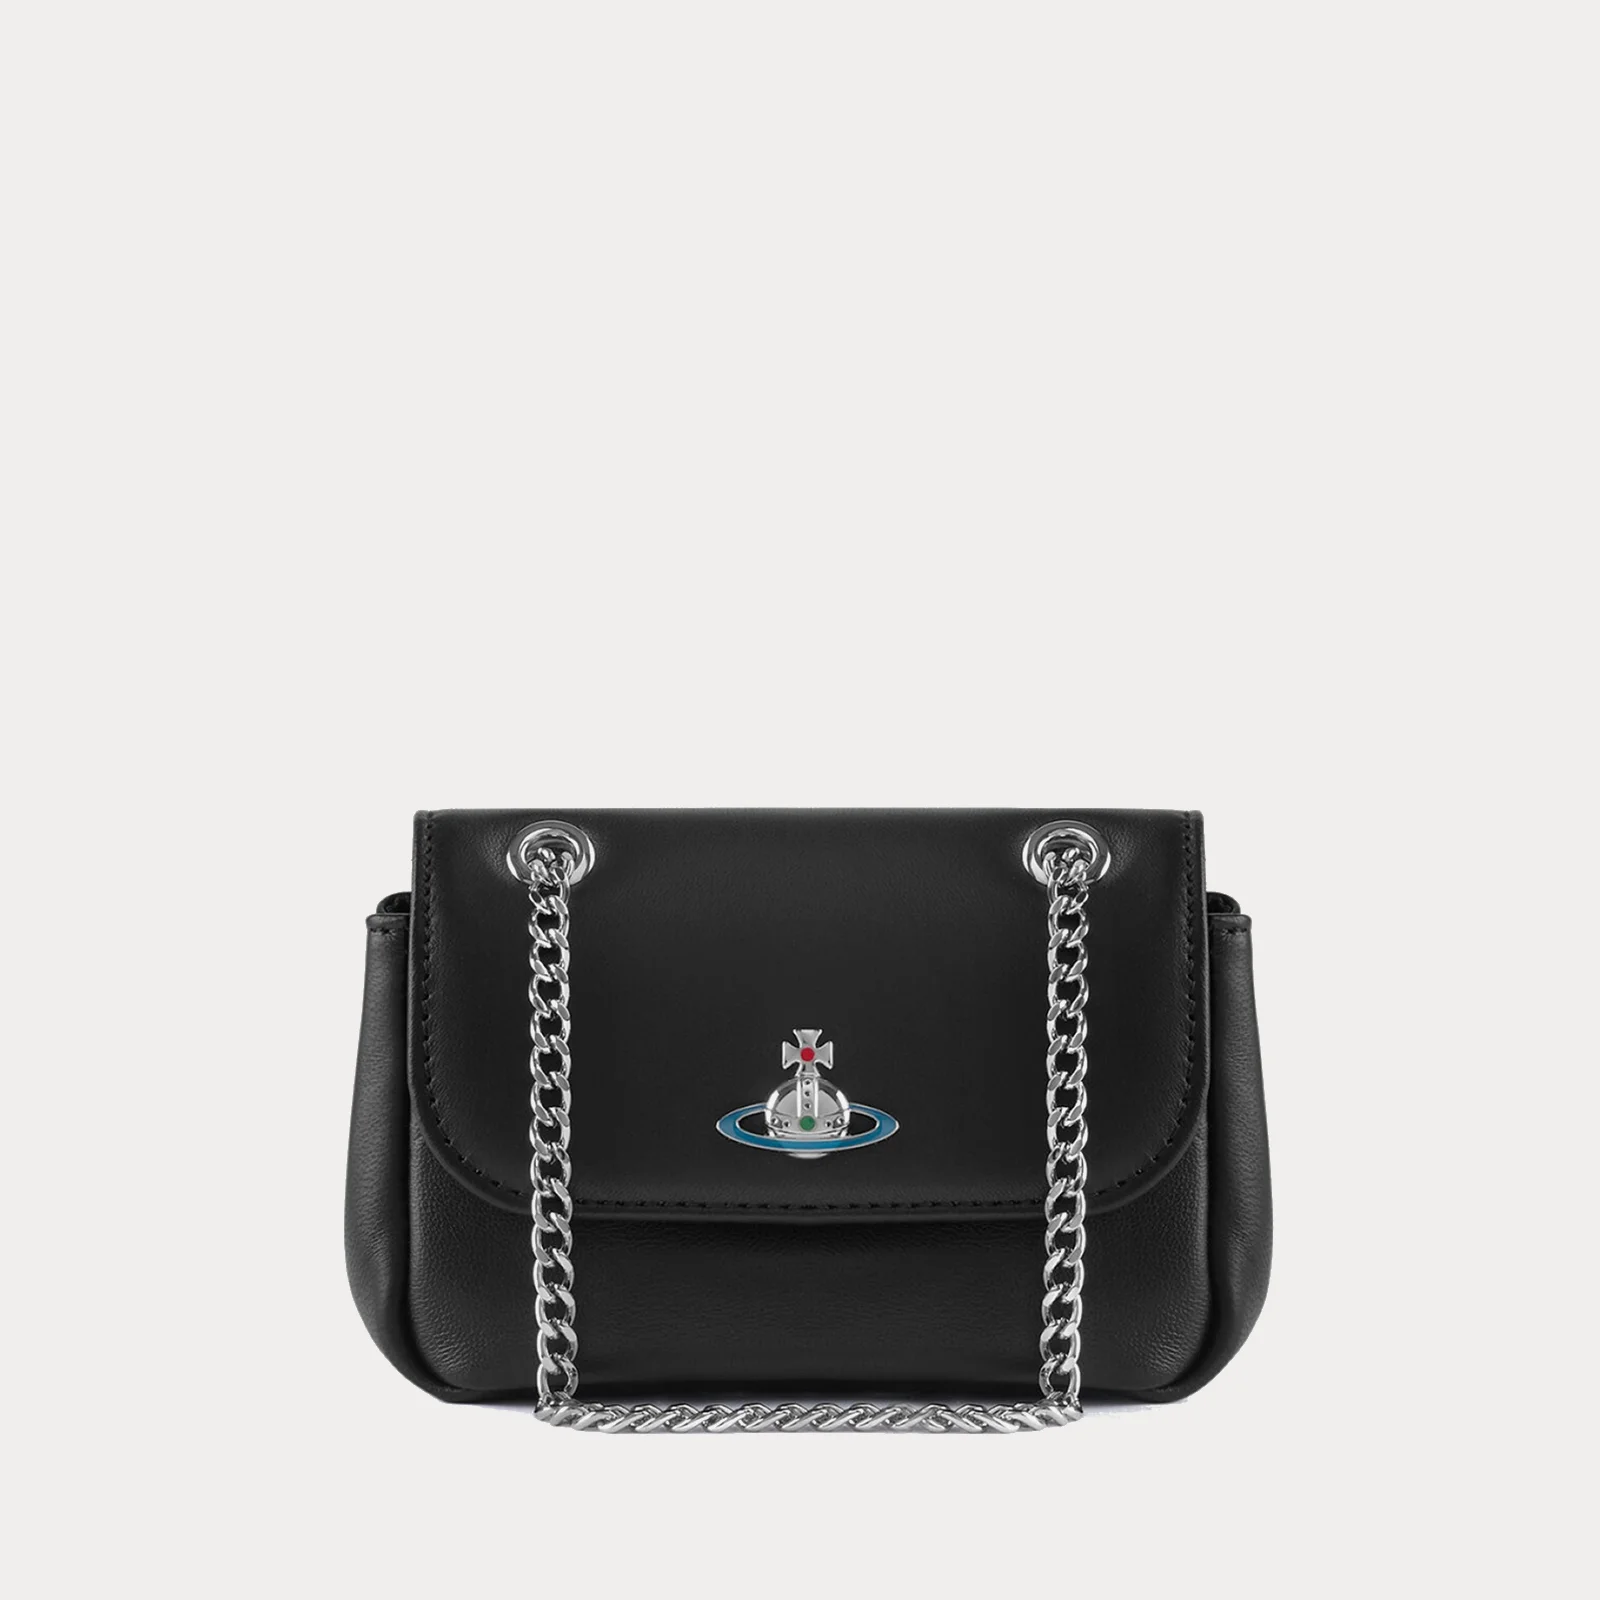 Vivienne Westwood Small Nappa Leather Shoulder Bag Image 1